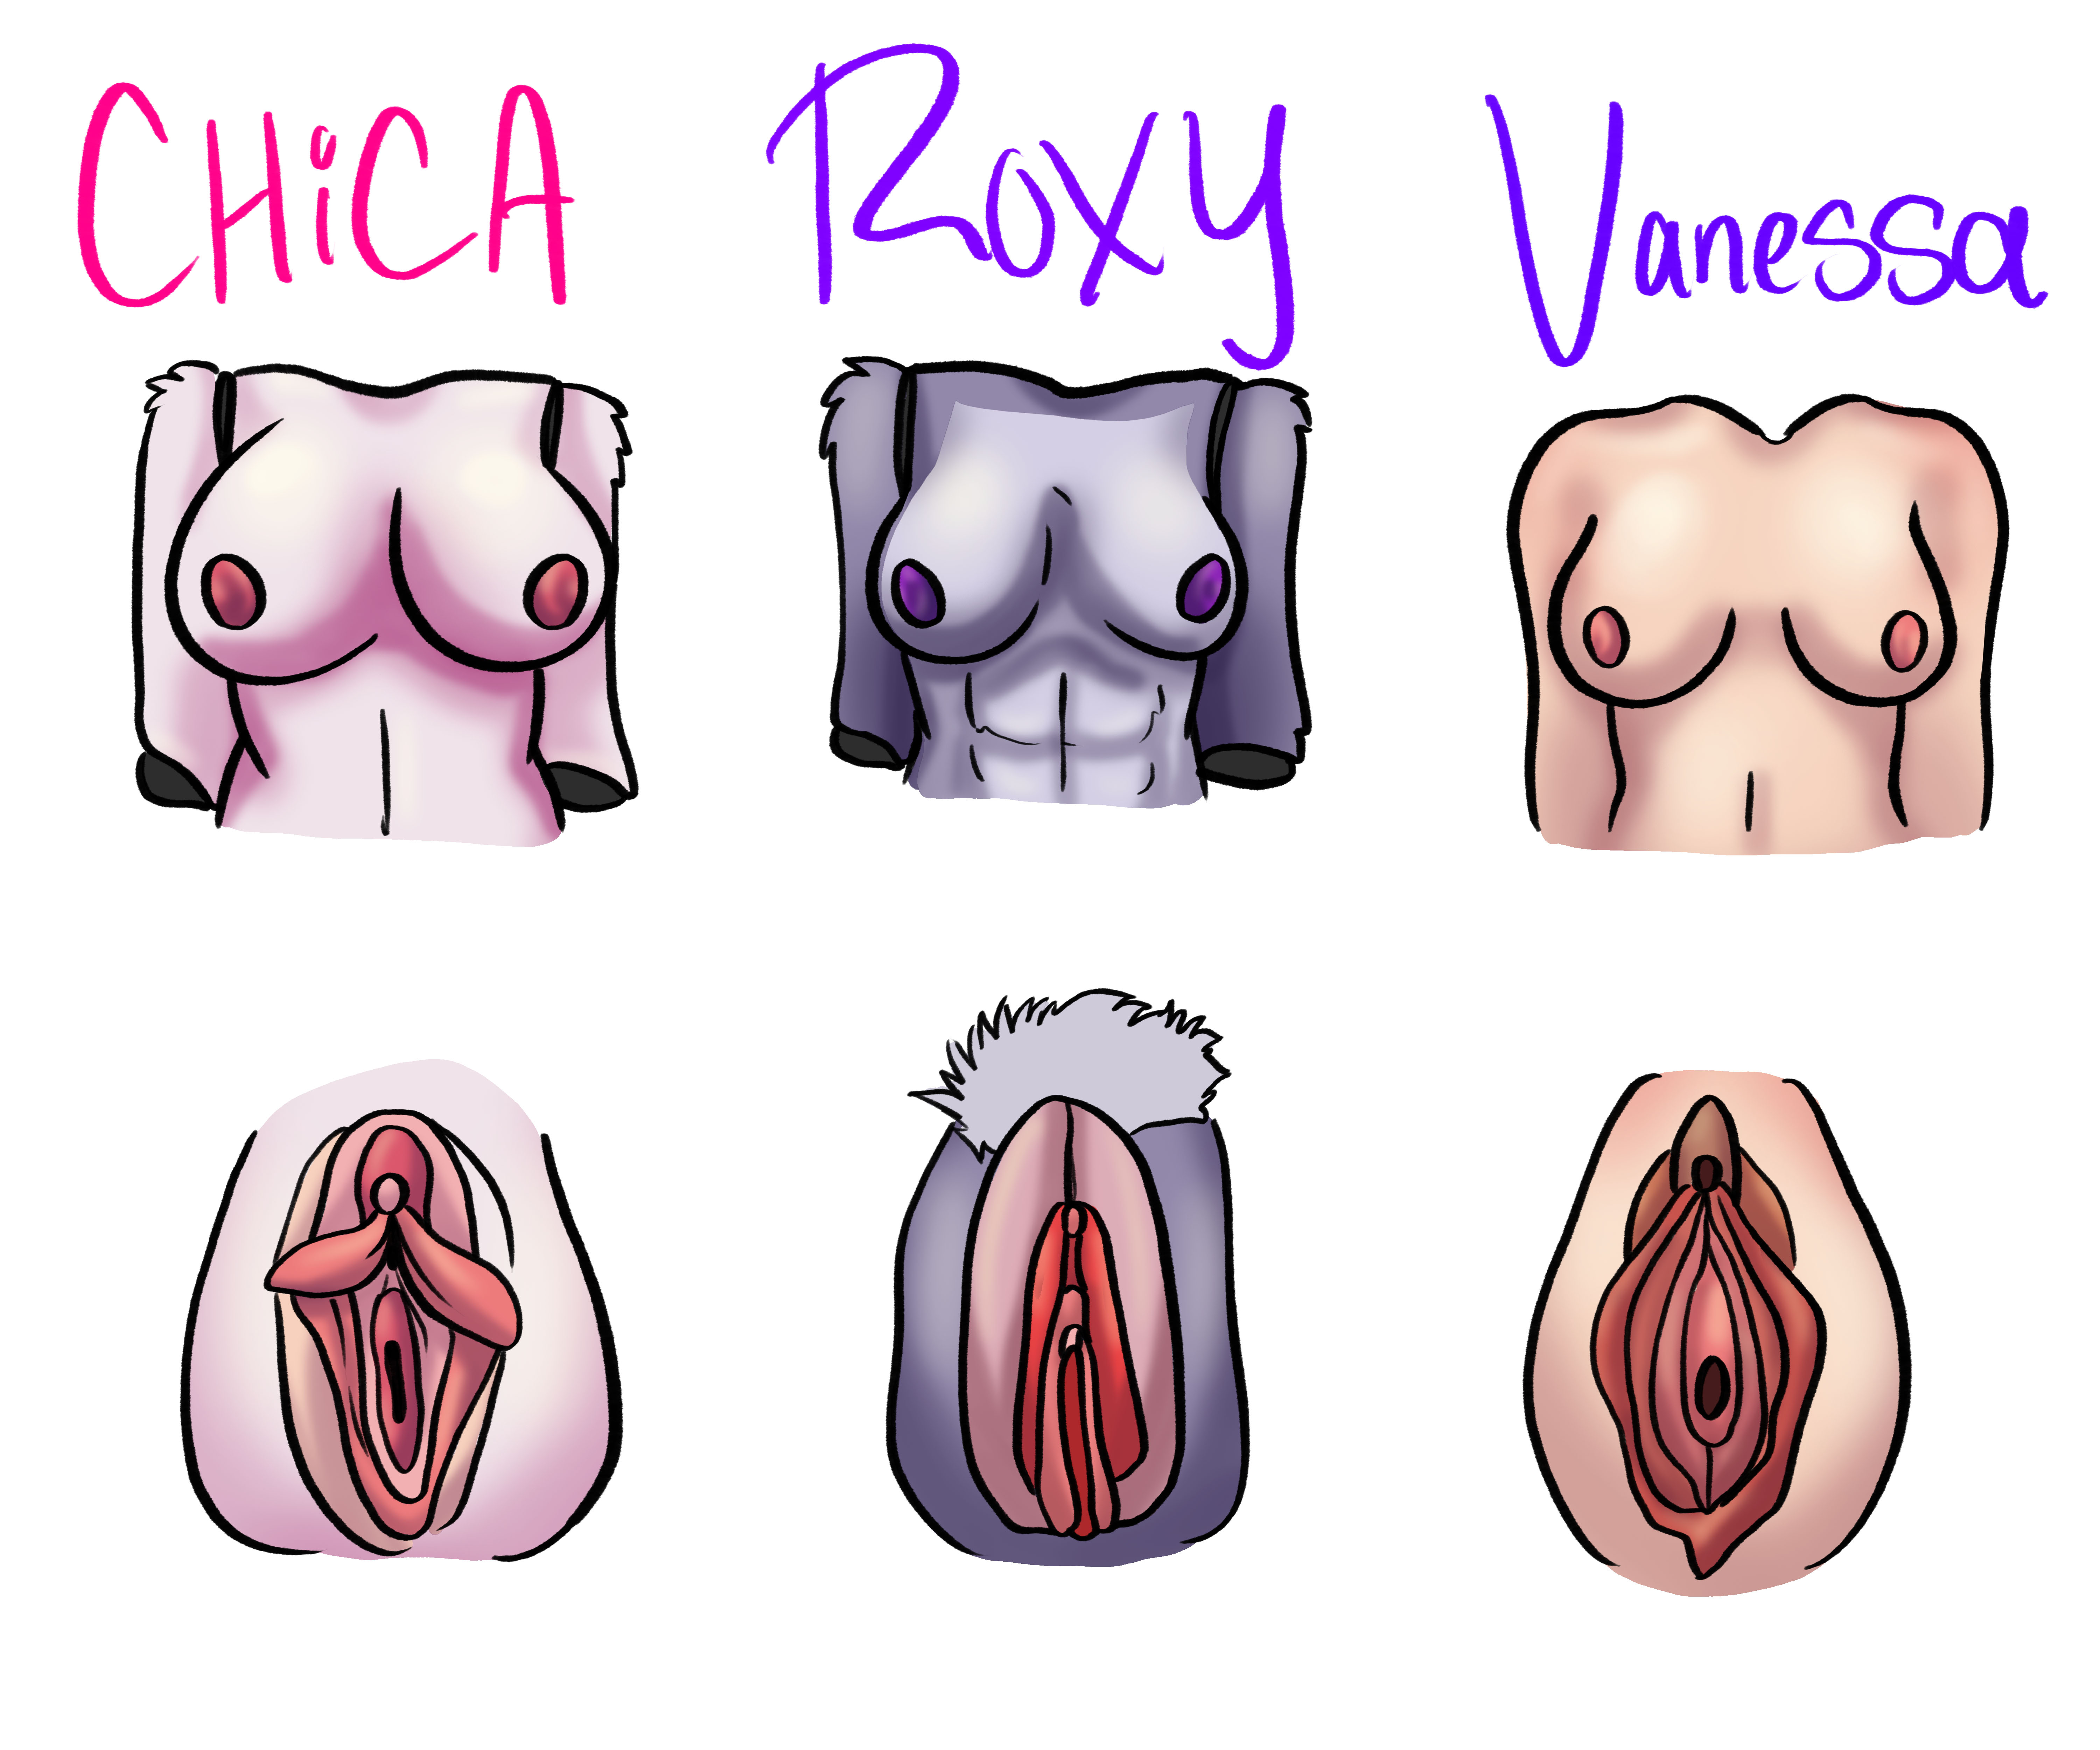 Breasts and vaginas